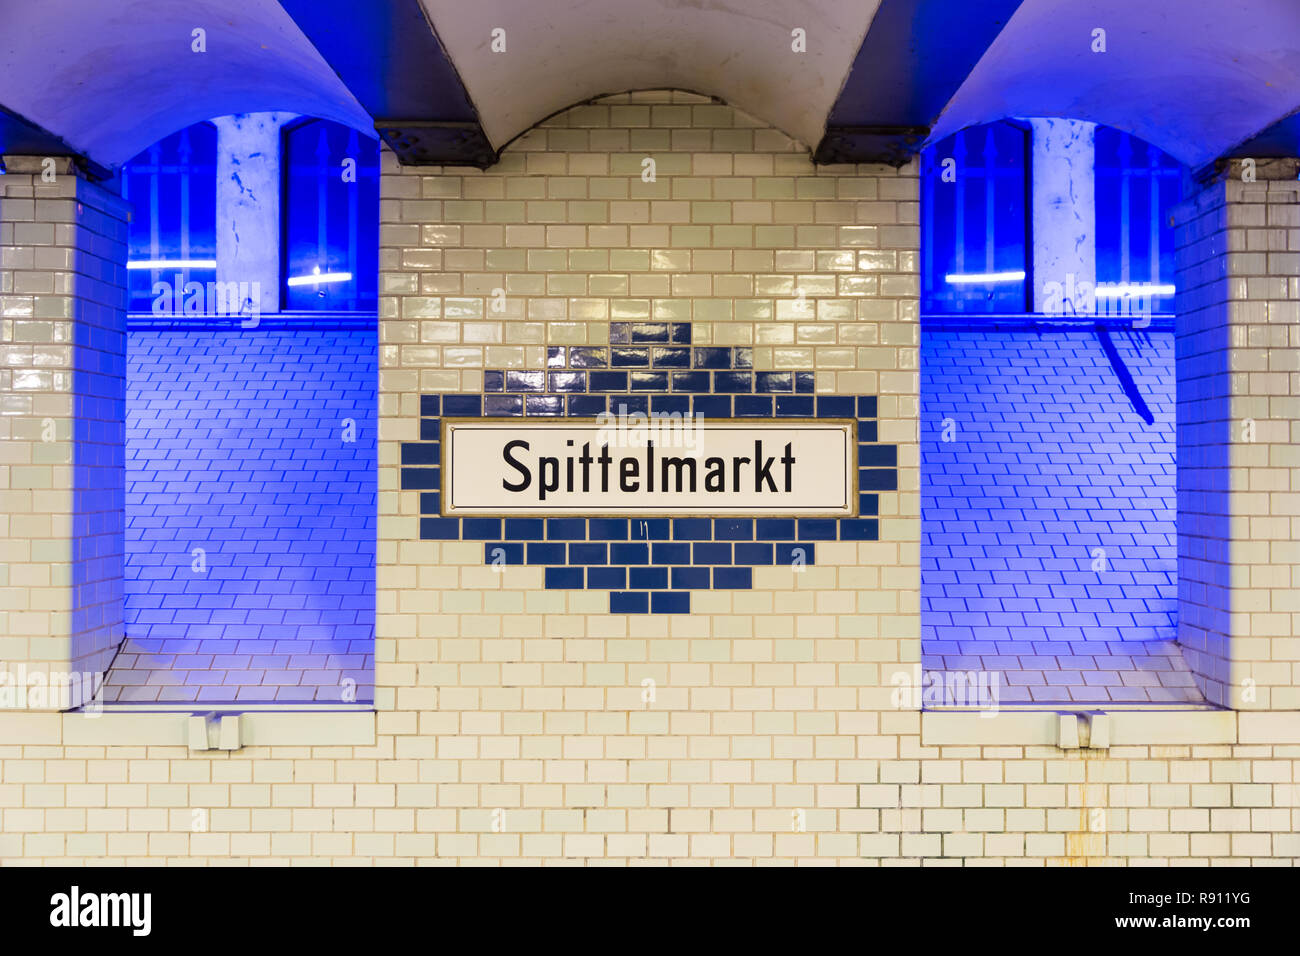 Berlin, Germany - December 18, 2017: Spittelmarkt station in Berlin subway located near to the Spree river Stock Photo